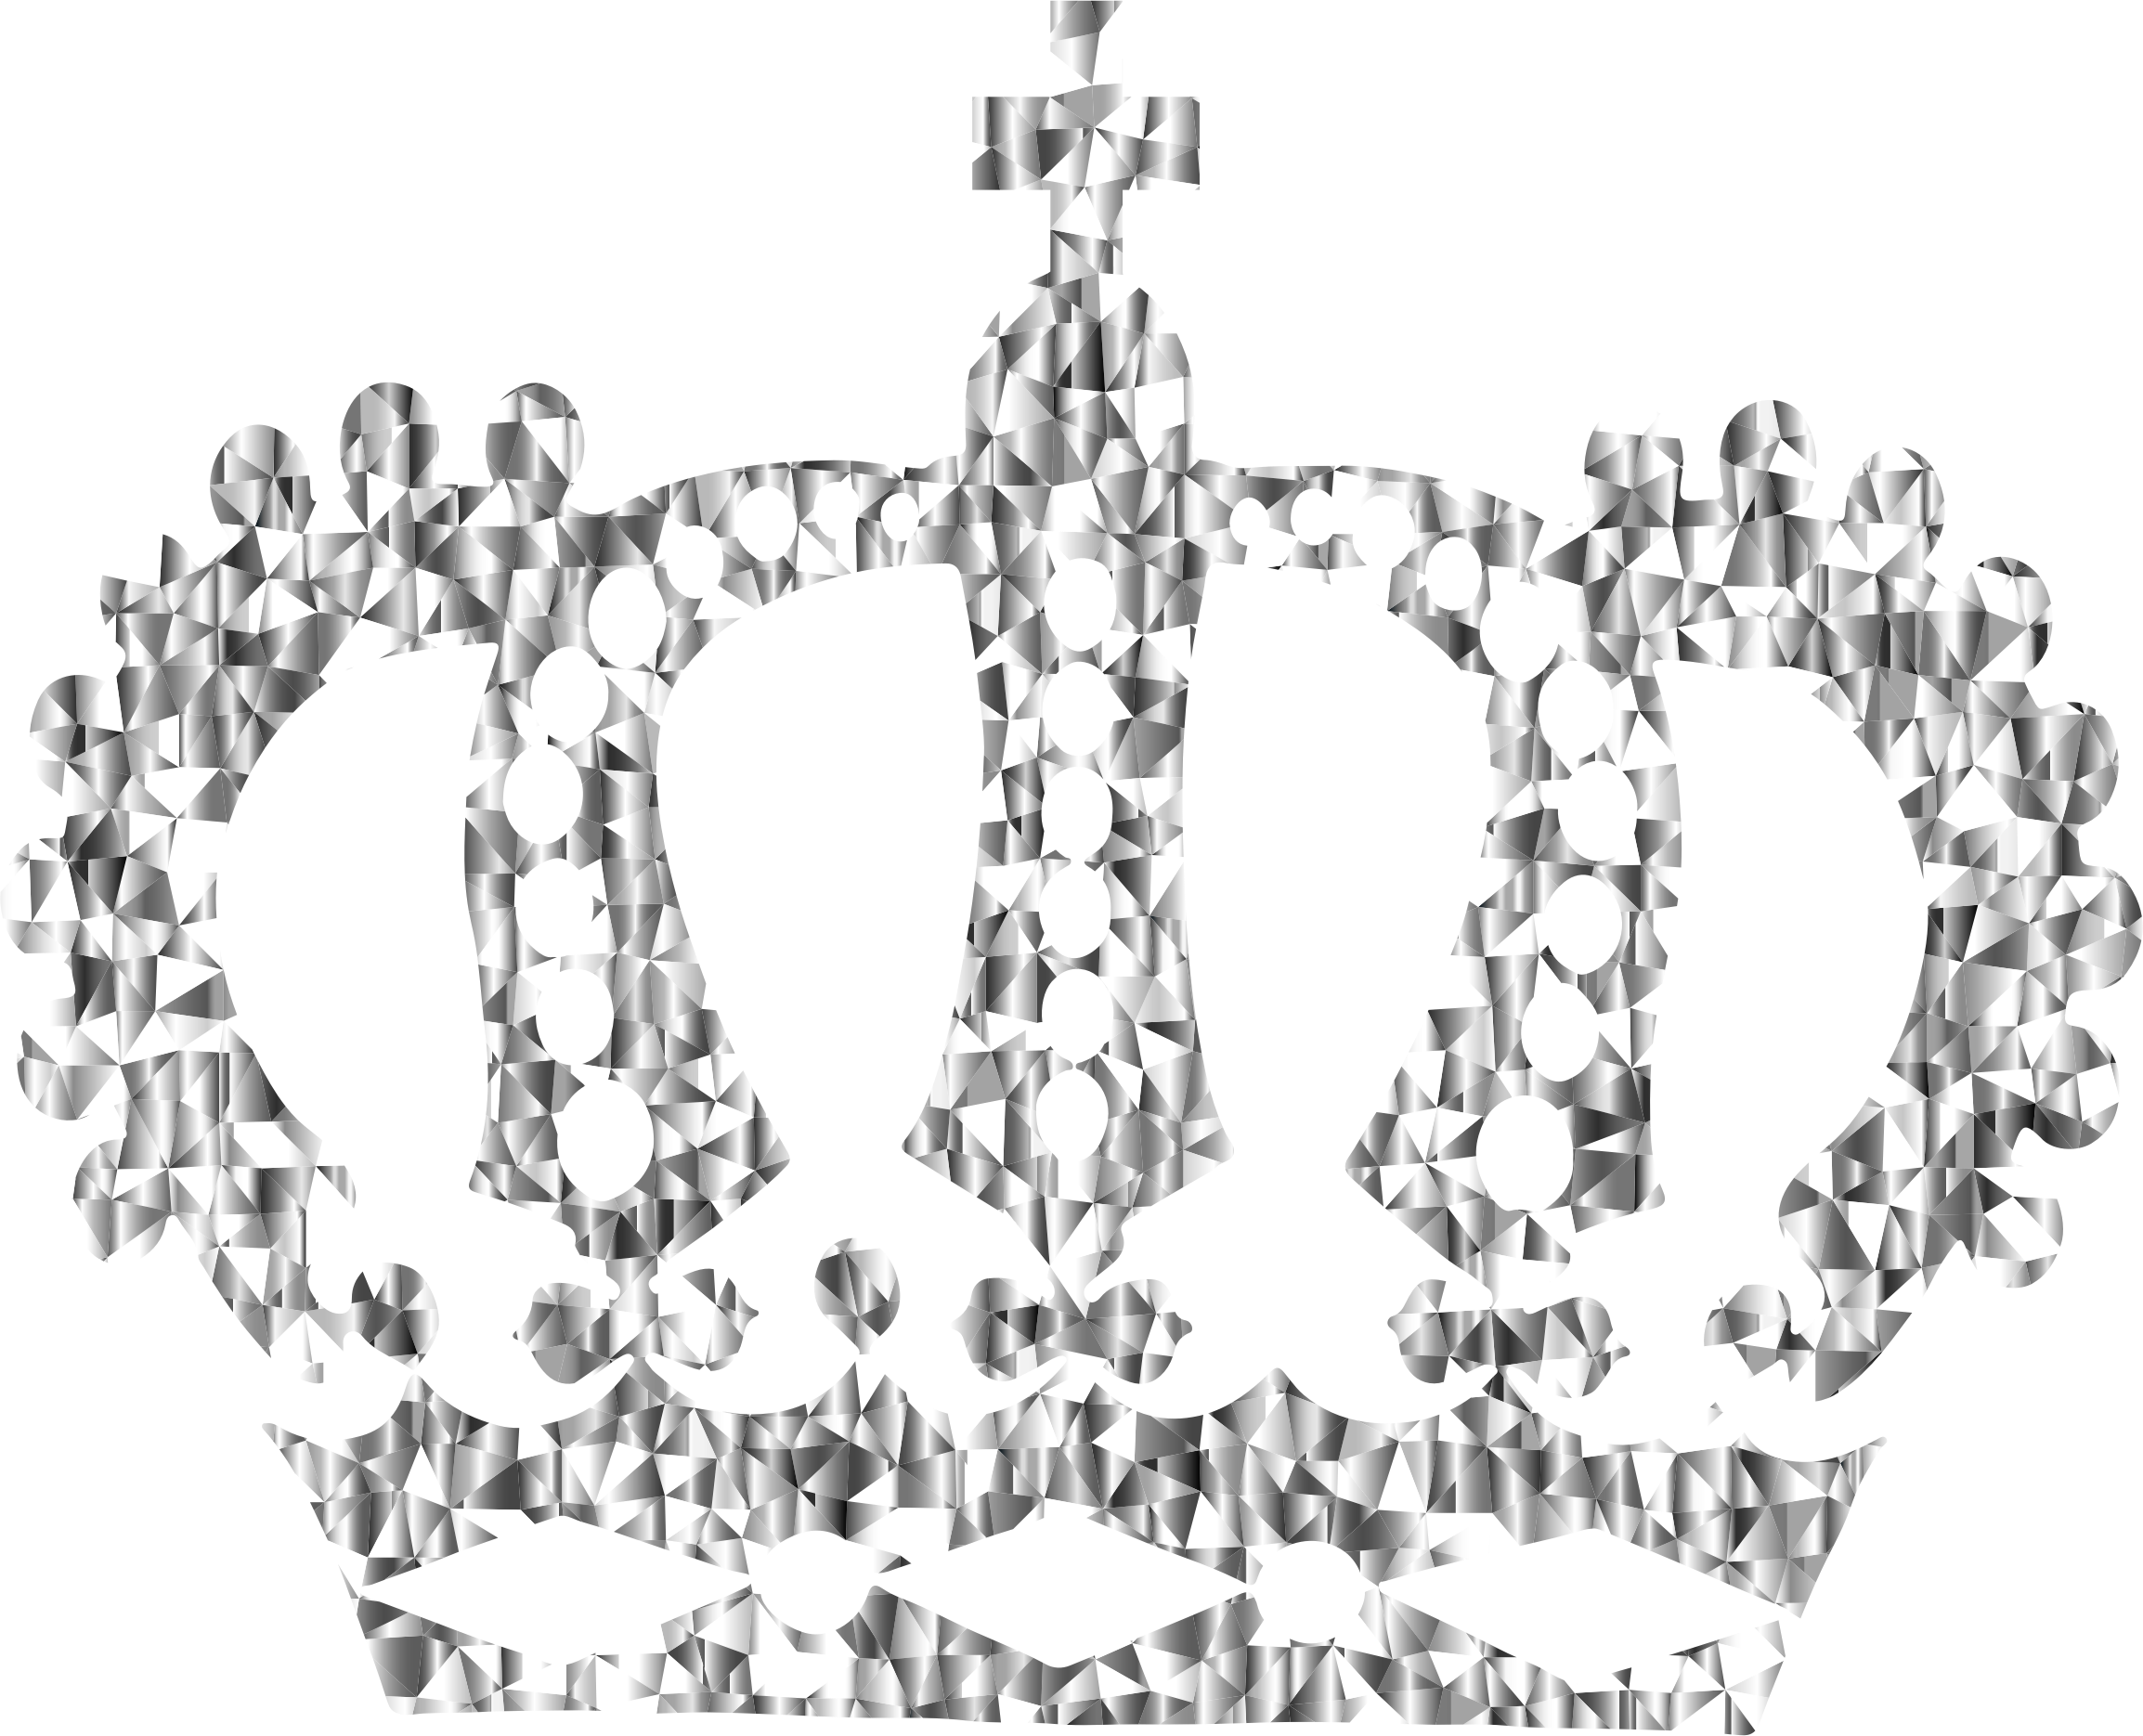 Royal crown icons png. Diamond clipart geometric